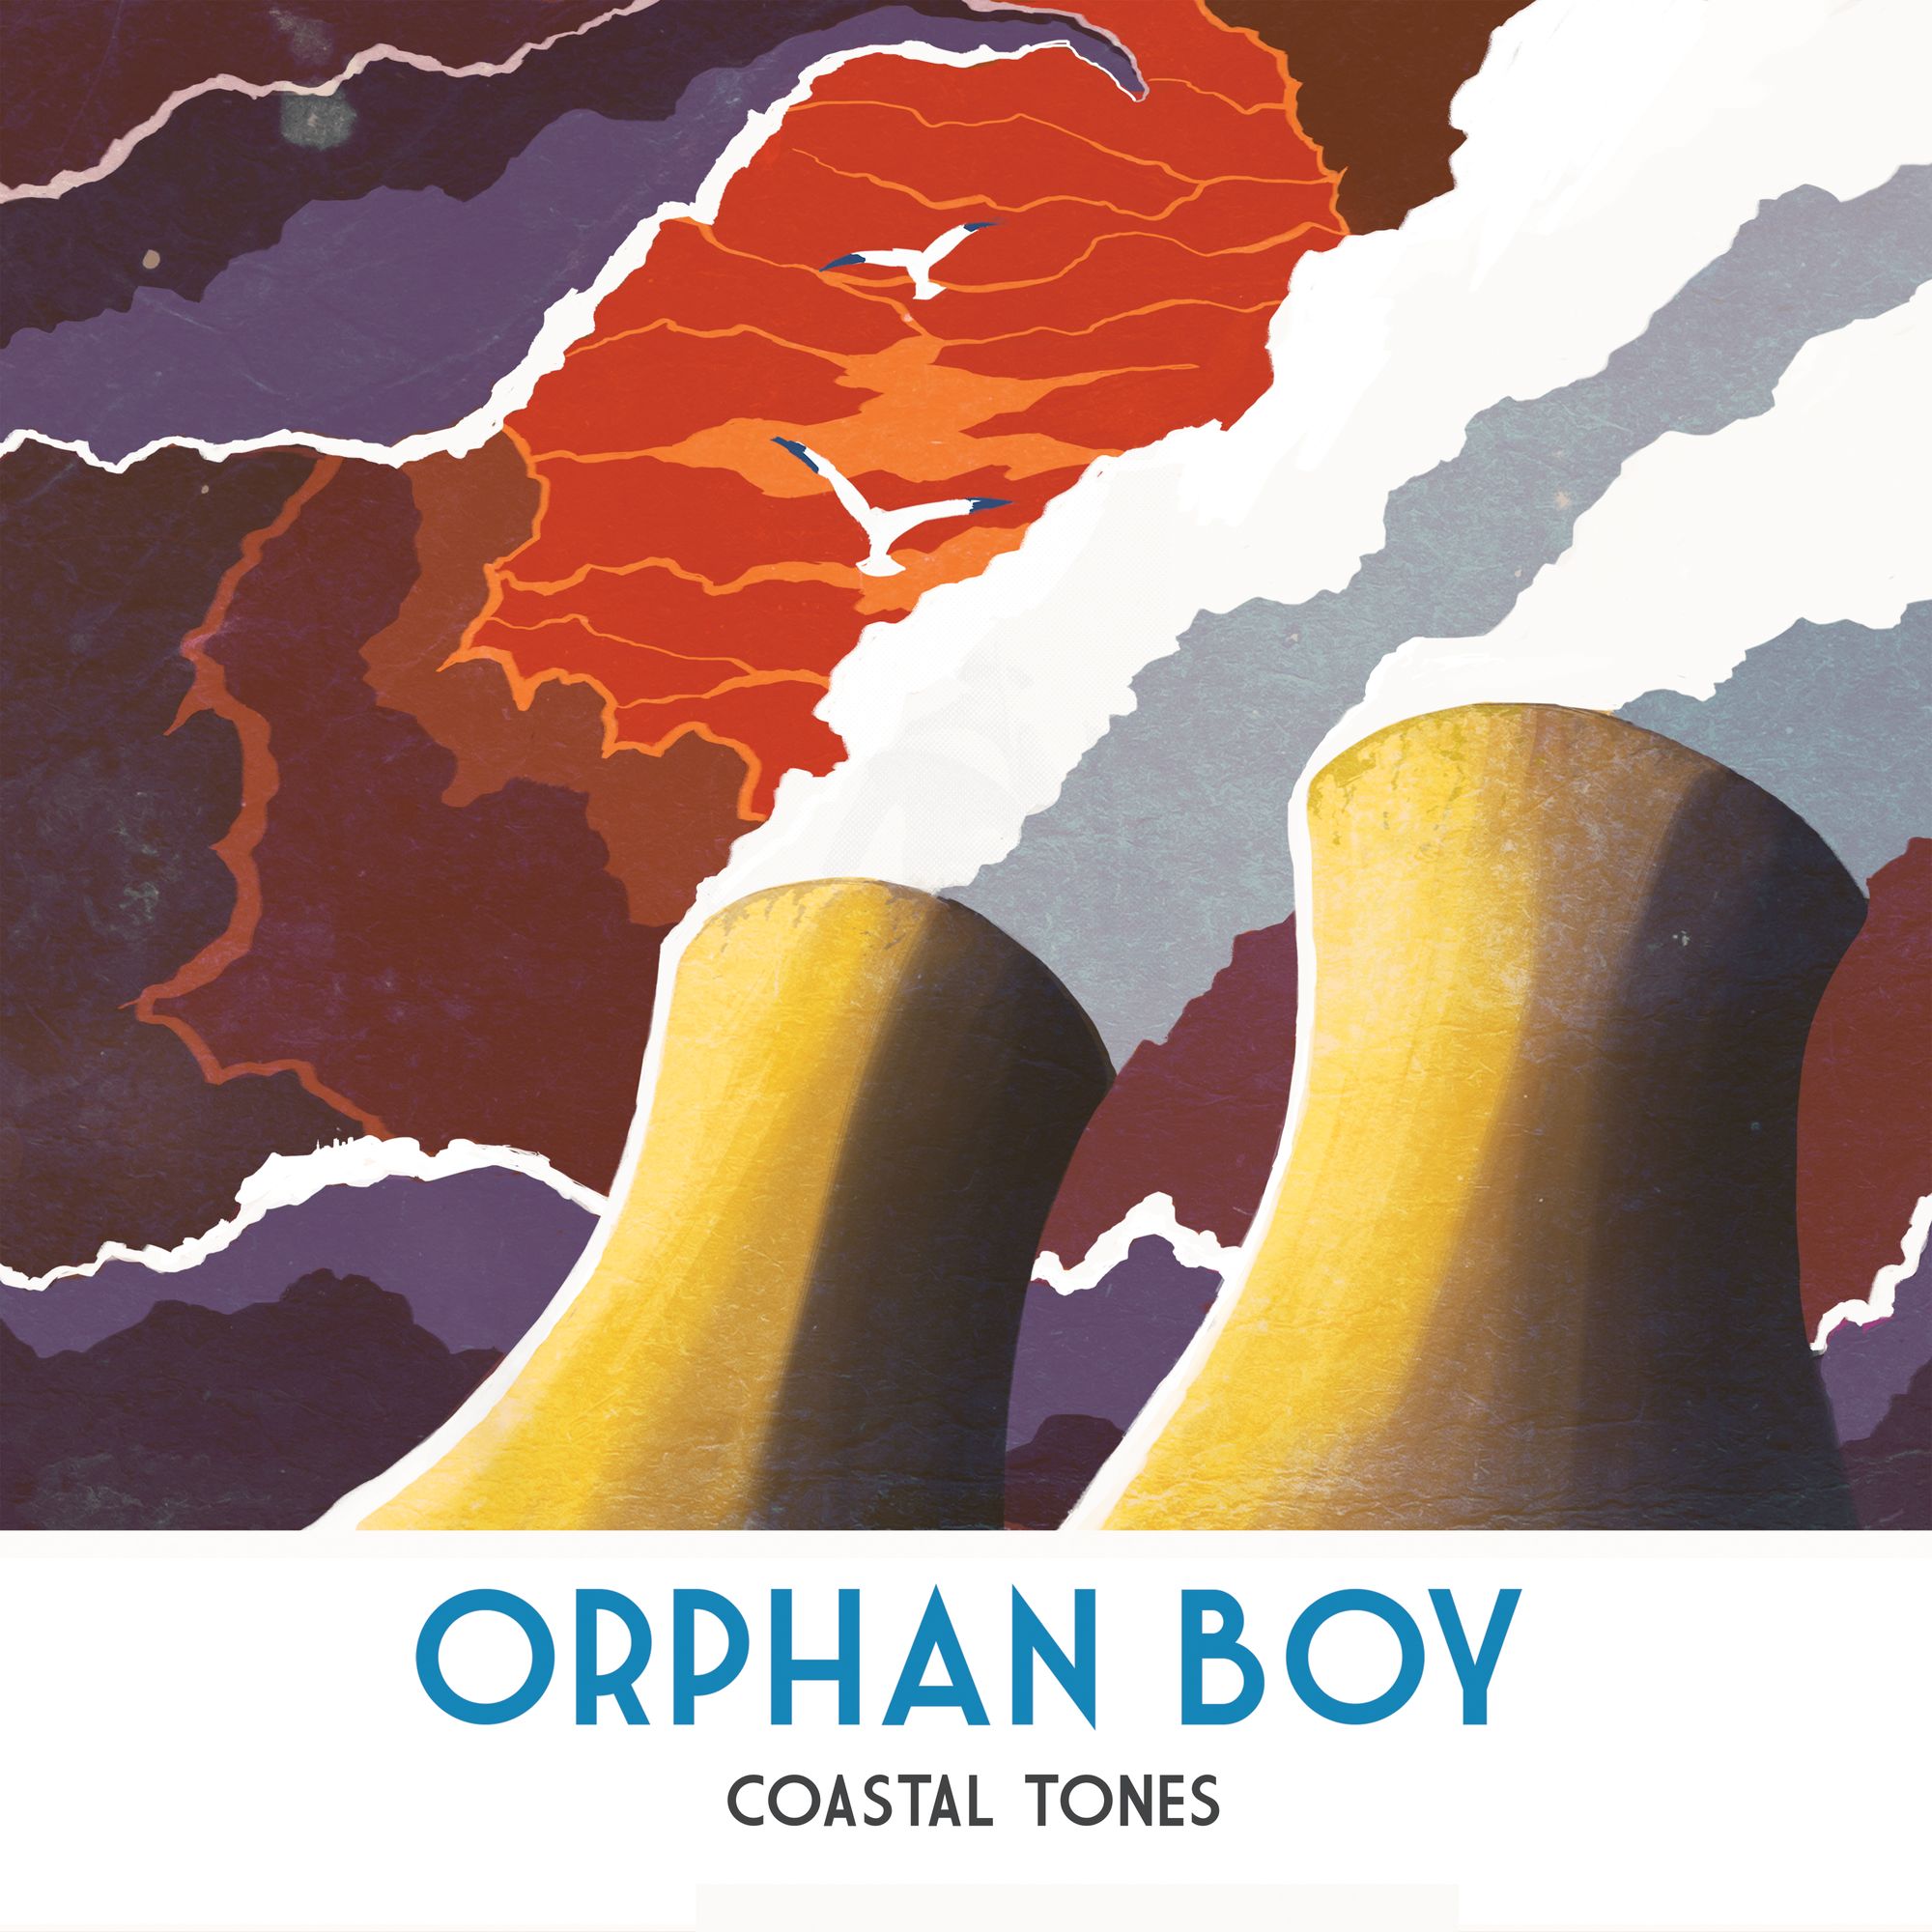 Coastal Tones - New Album by Orphan Boy